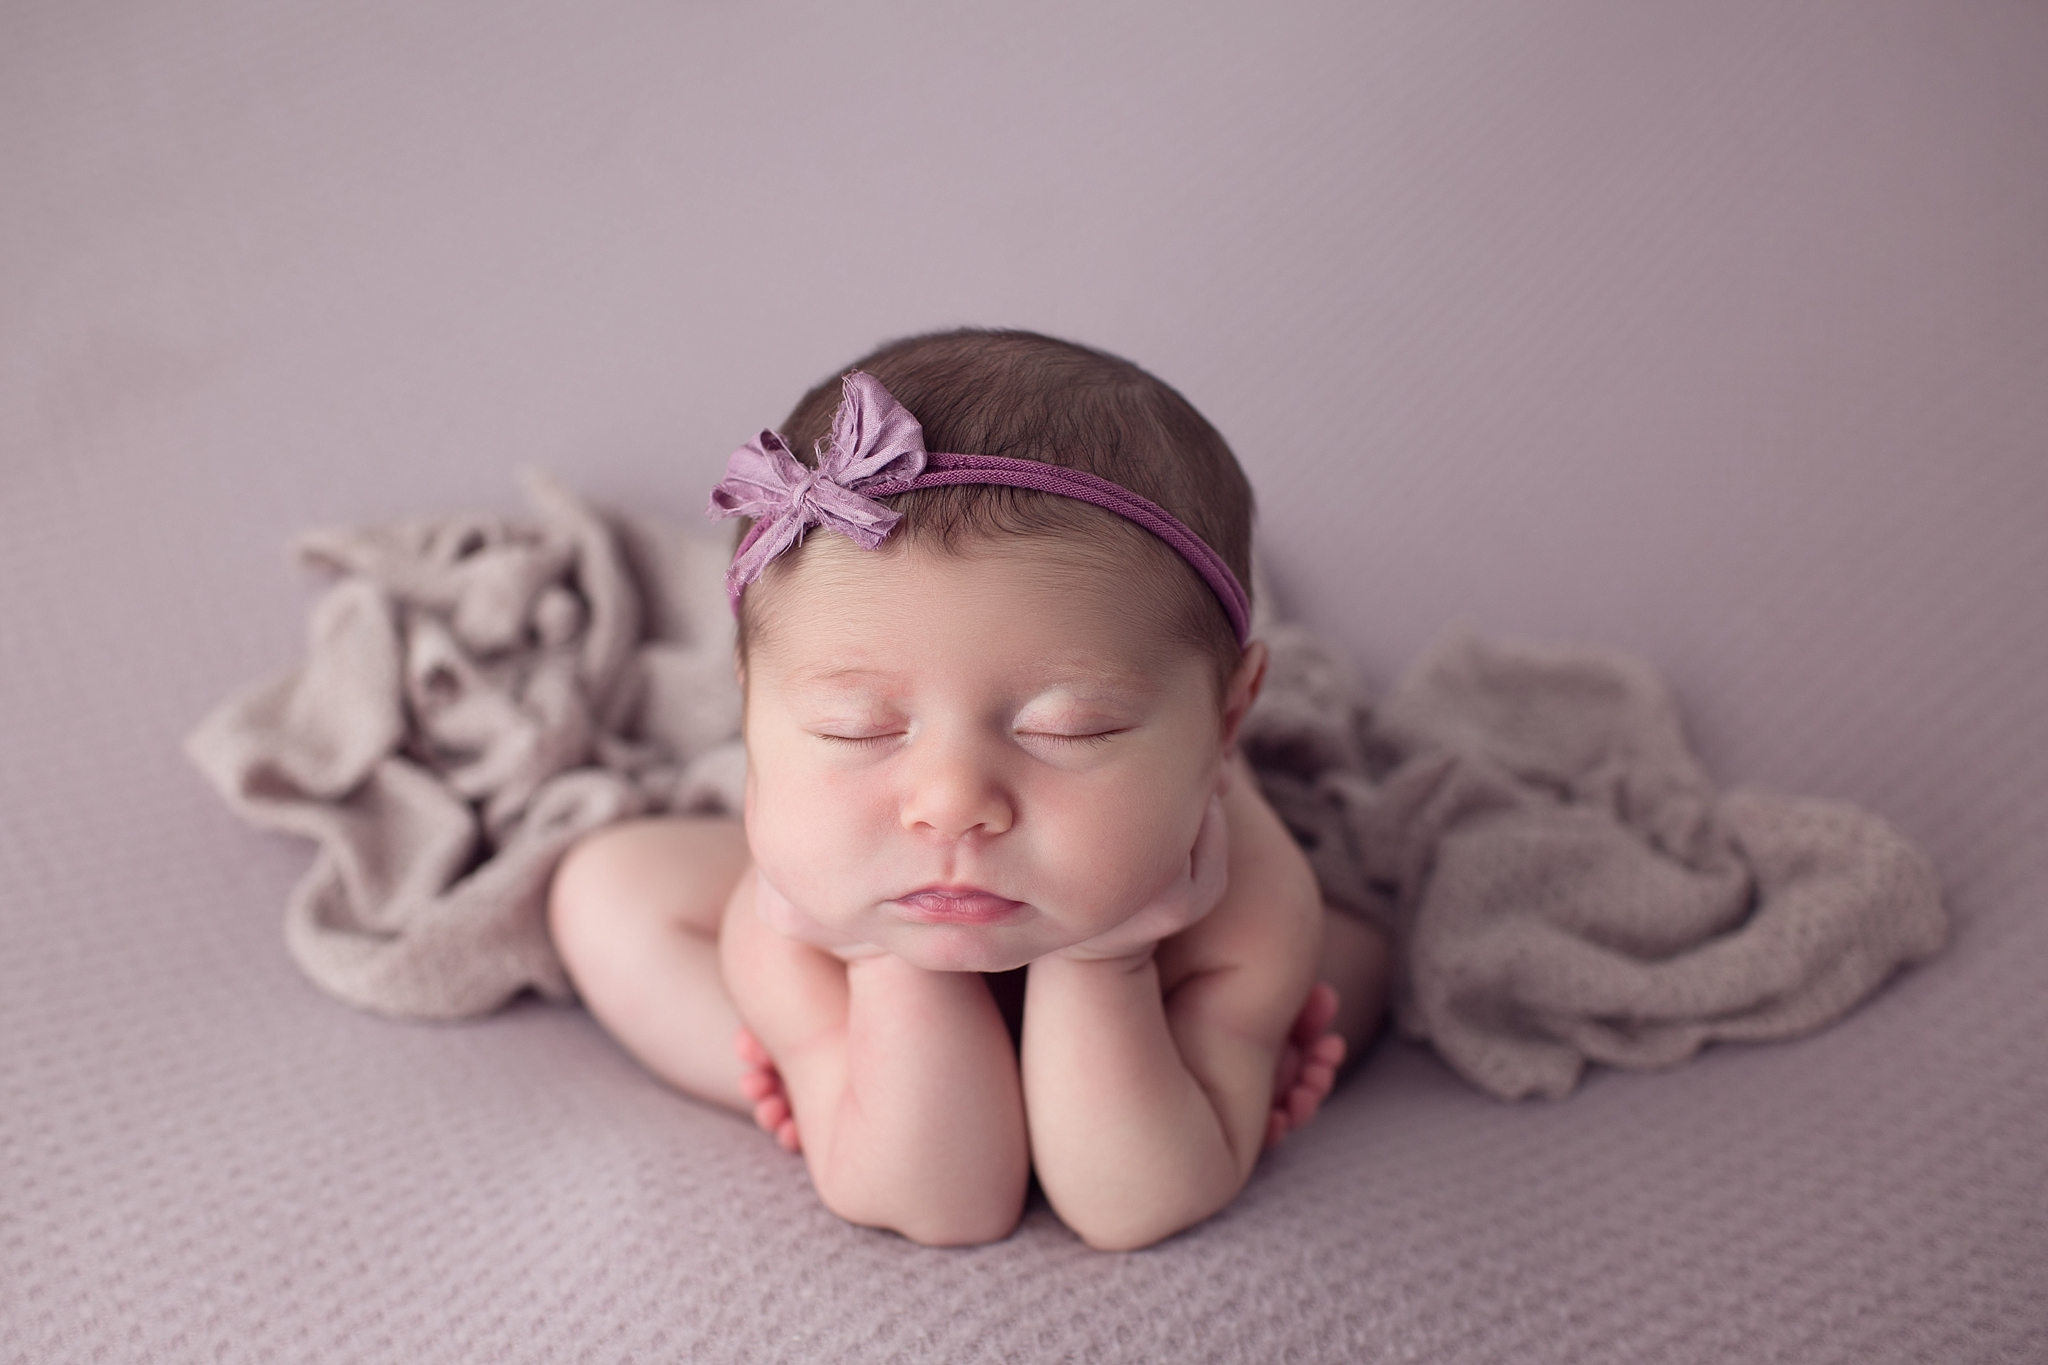 Baby girl resting on hands on lavender